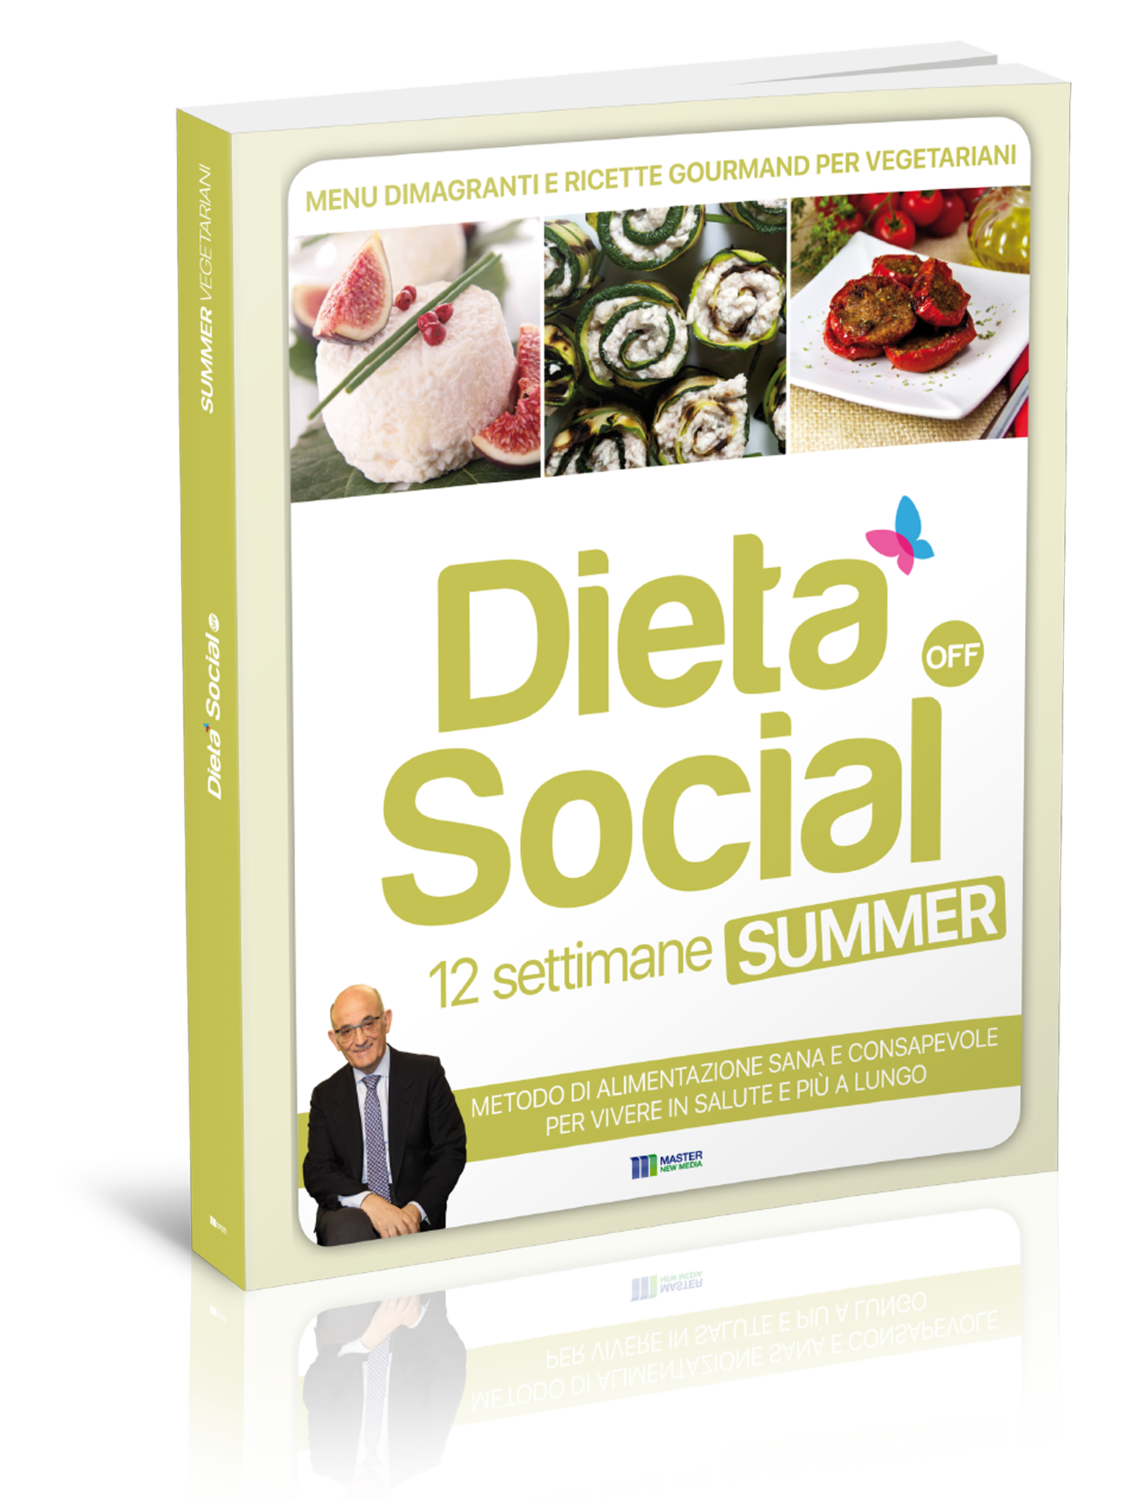 Dieta Social OFF Summer (ESTATE) per VEGETARIANI (con 3 mesi di menu e ricette)